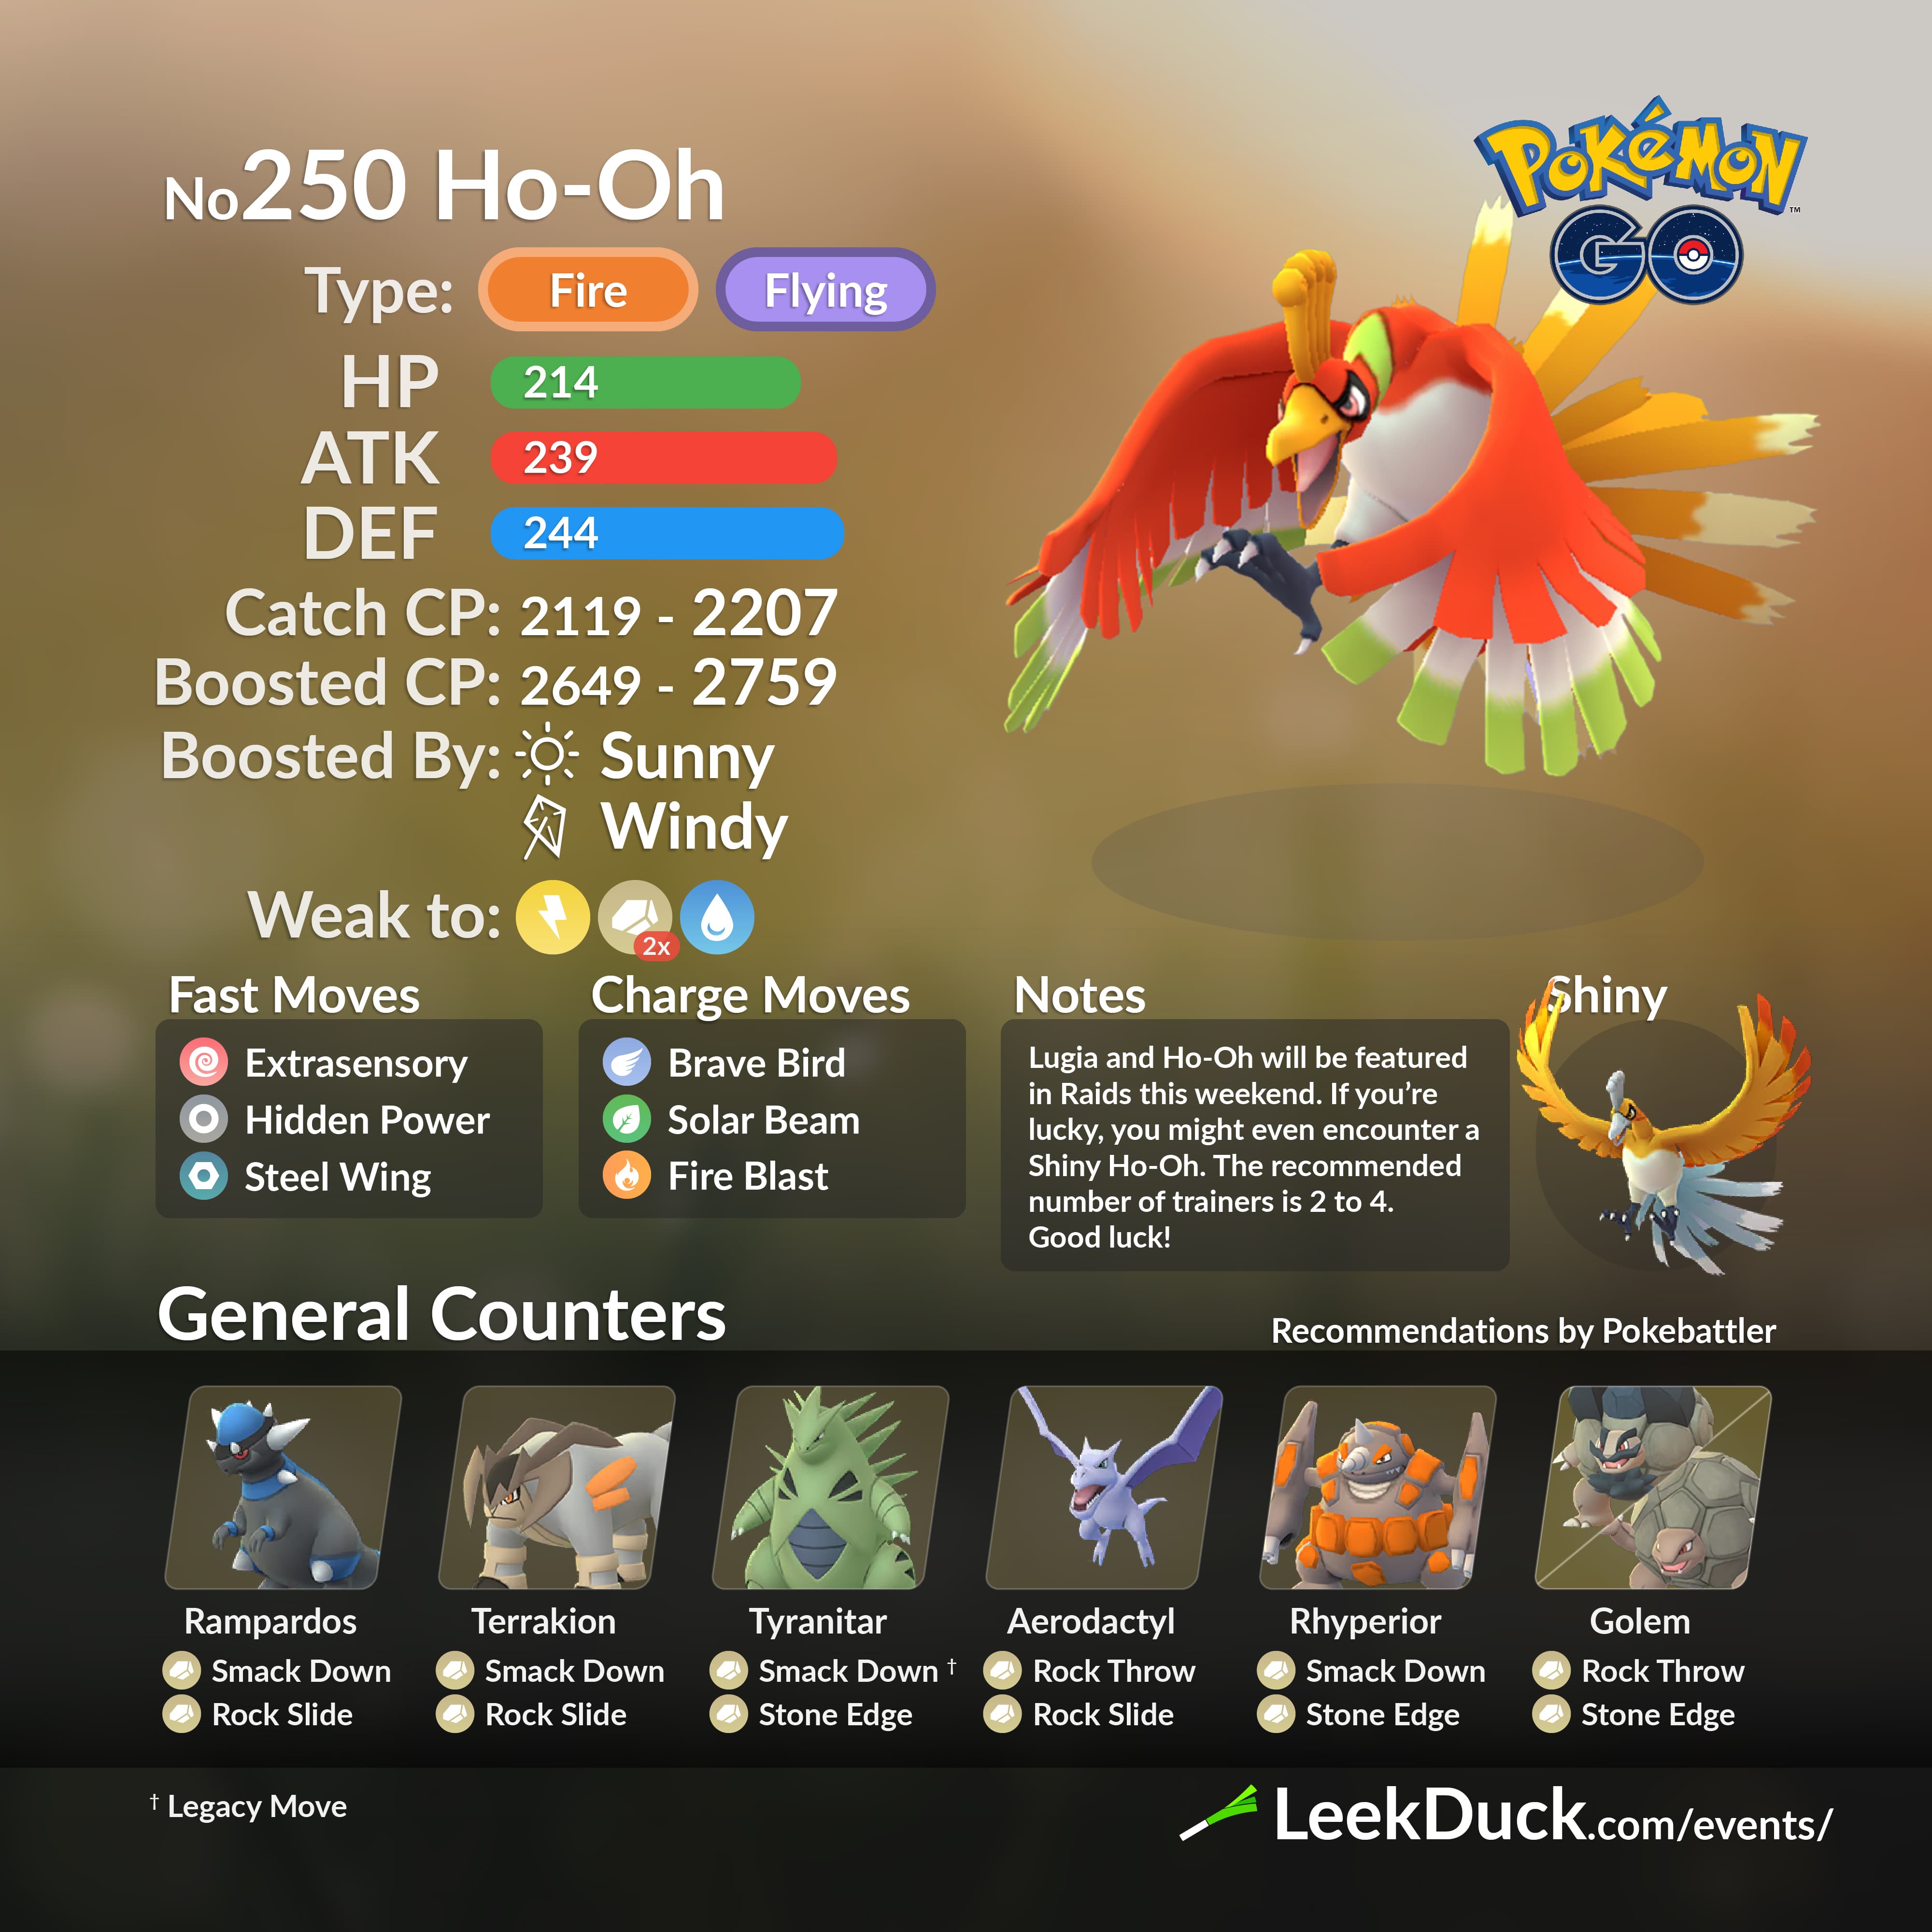 Pokemon GO Lugia raid guide (March 2023): Best counters